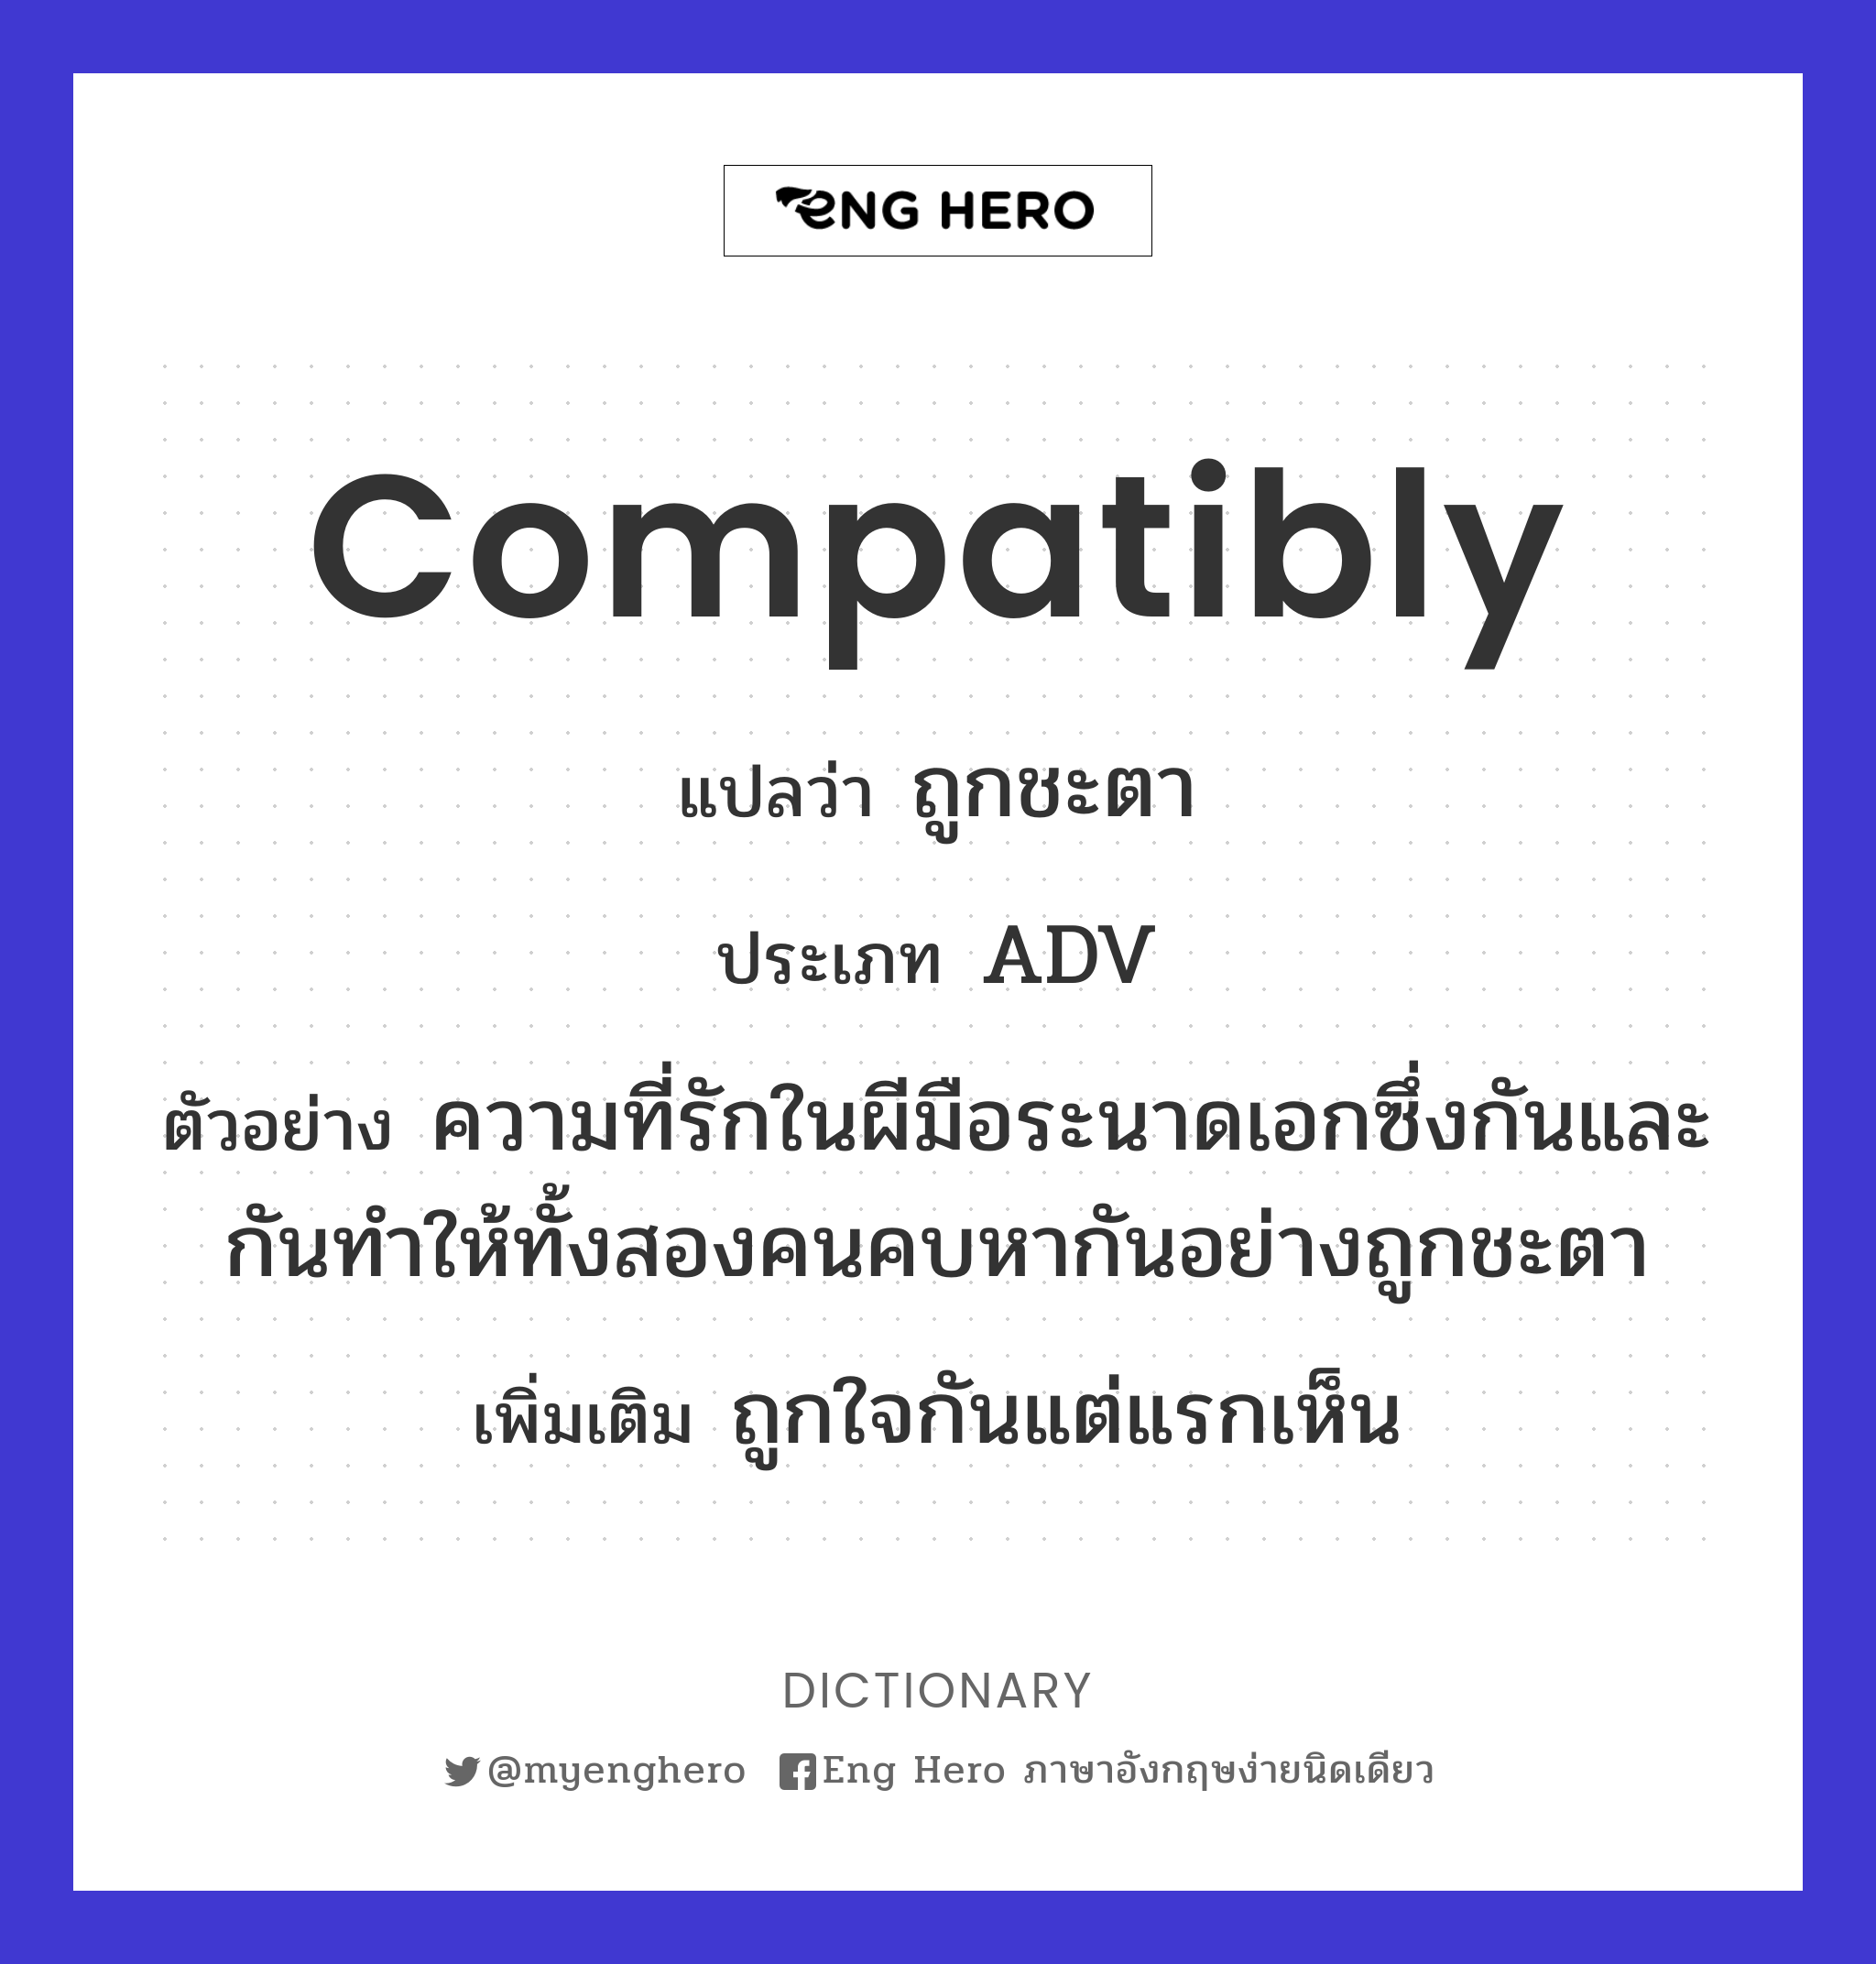 compatibly